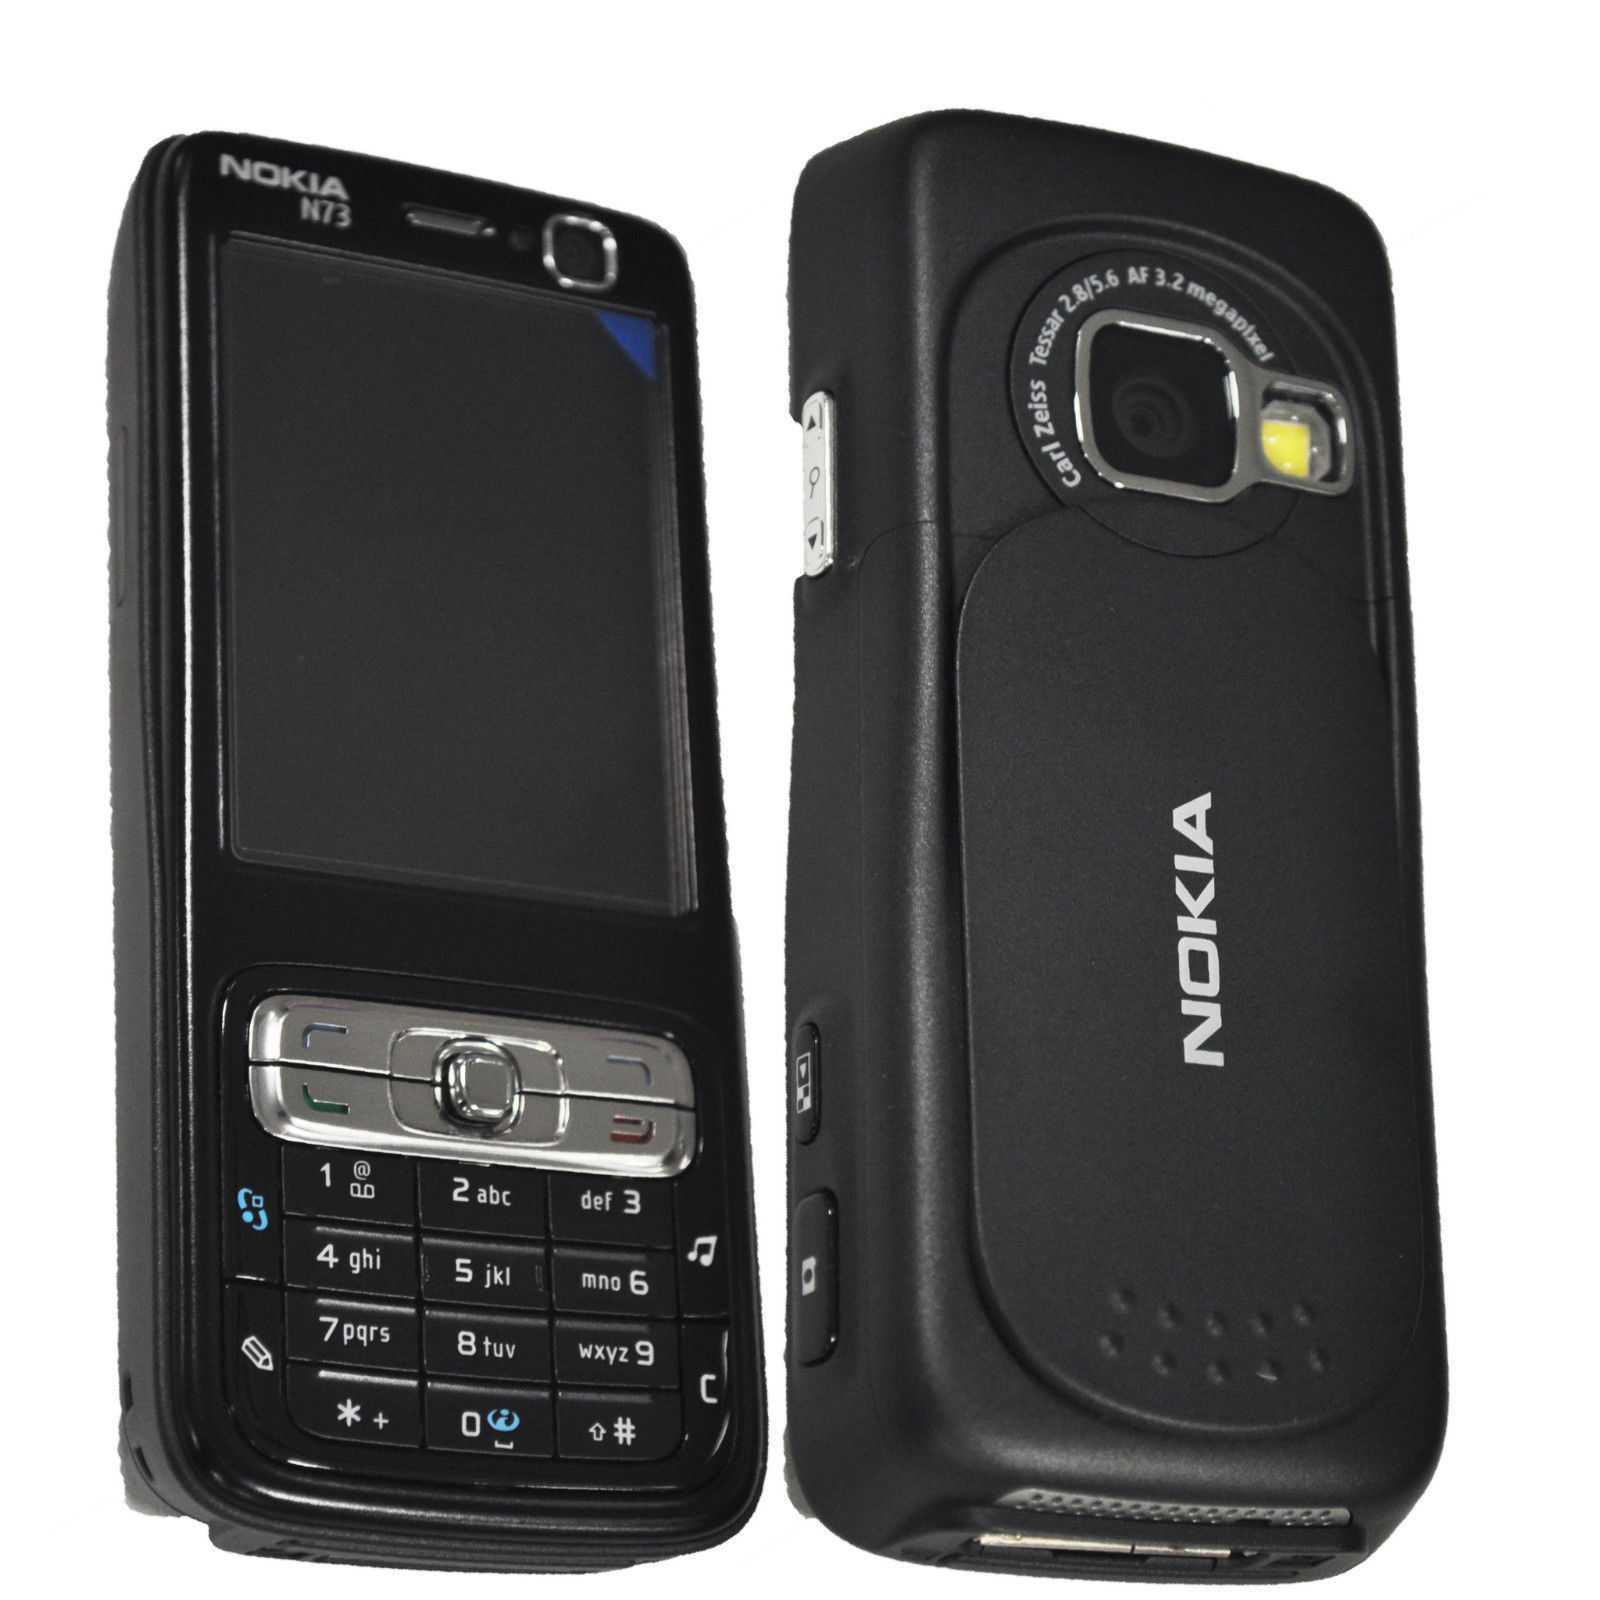 Nokia n70 music edition - описание телефона